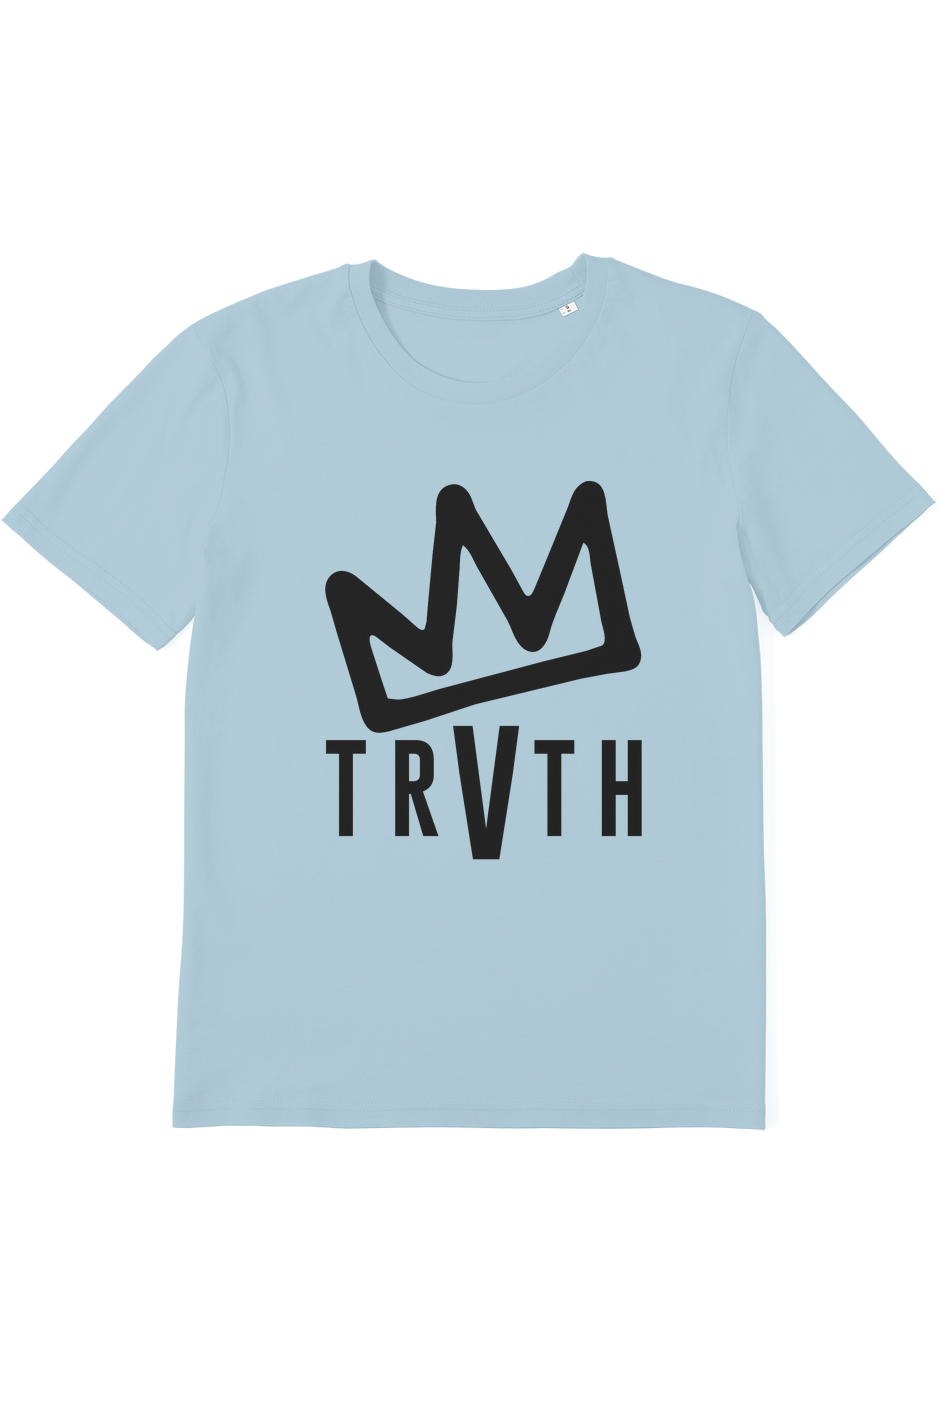 Kaizer Trvth Organic T-Shirt vegan, sustainable, organic streetwear, - TRVTH ORGANIC CLOTHING